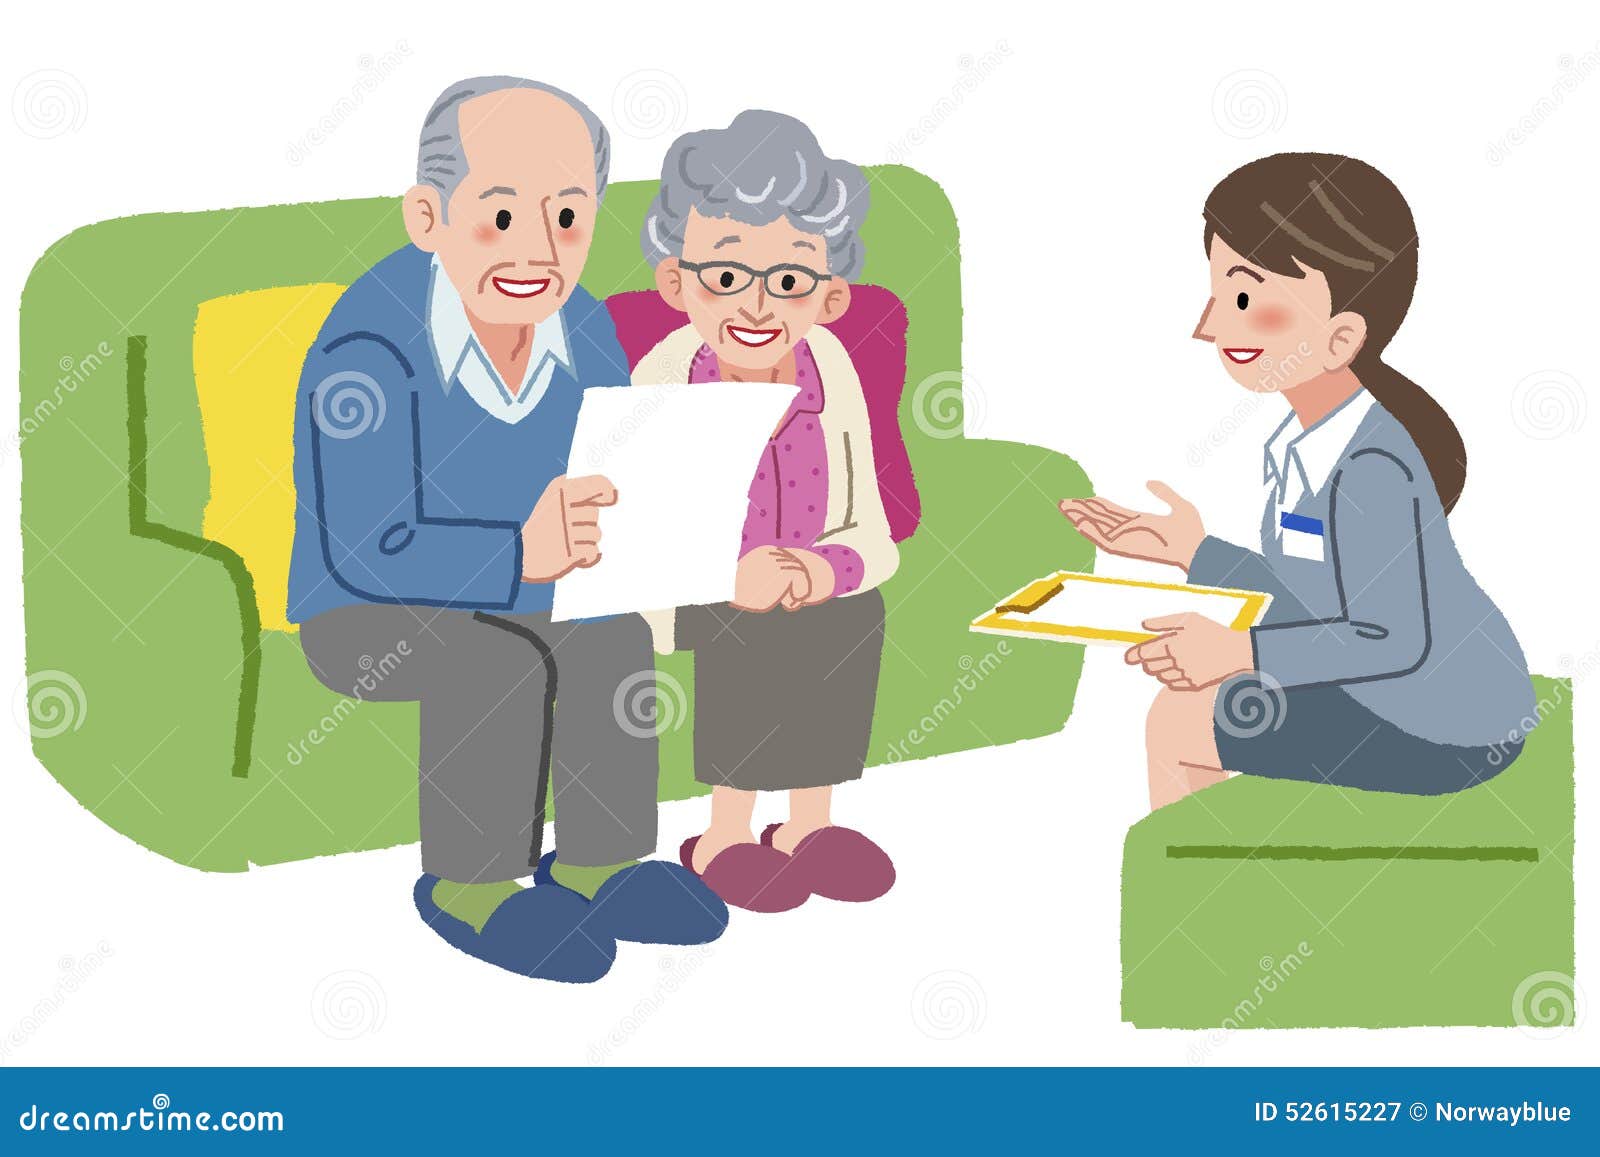 clipart elderly care - photo #39